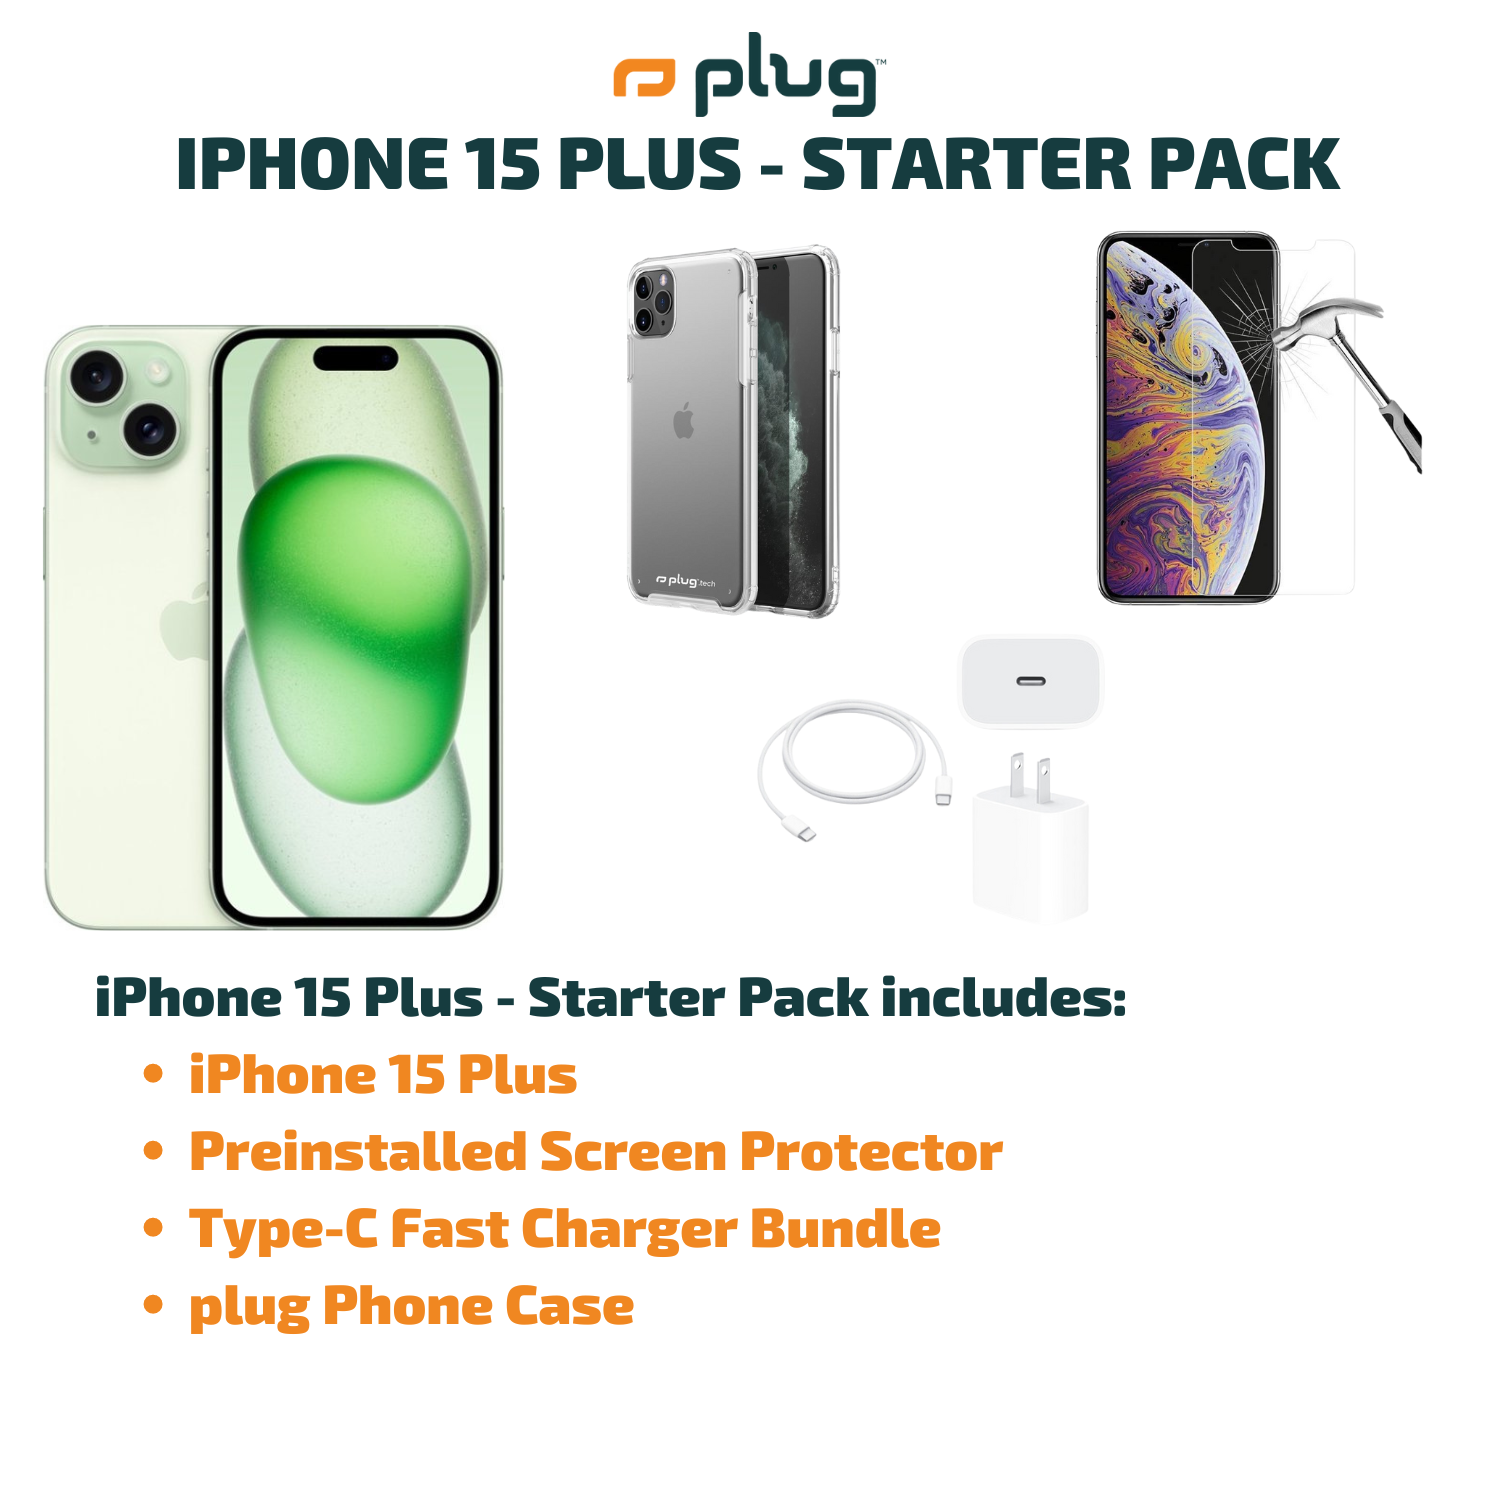 iPhone 15 Plus - Starter Pack